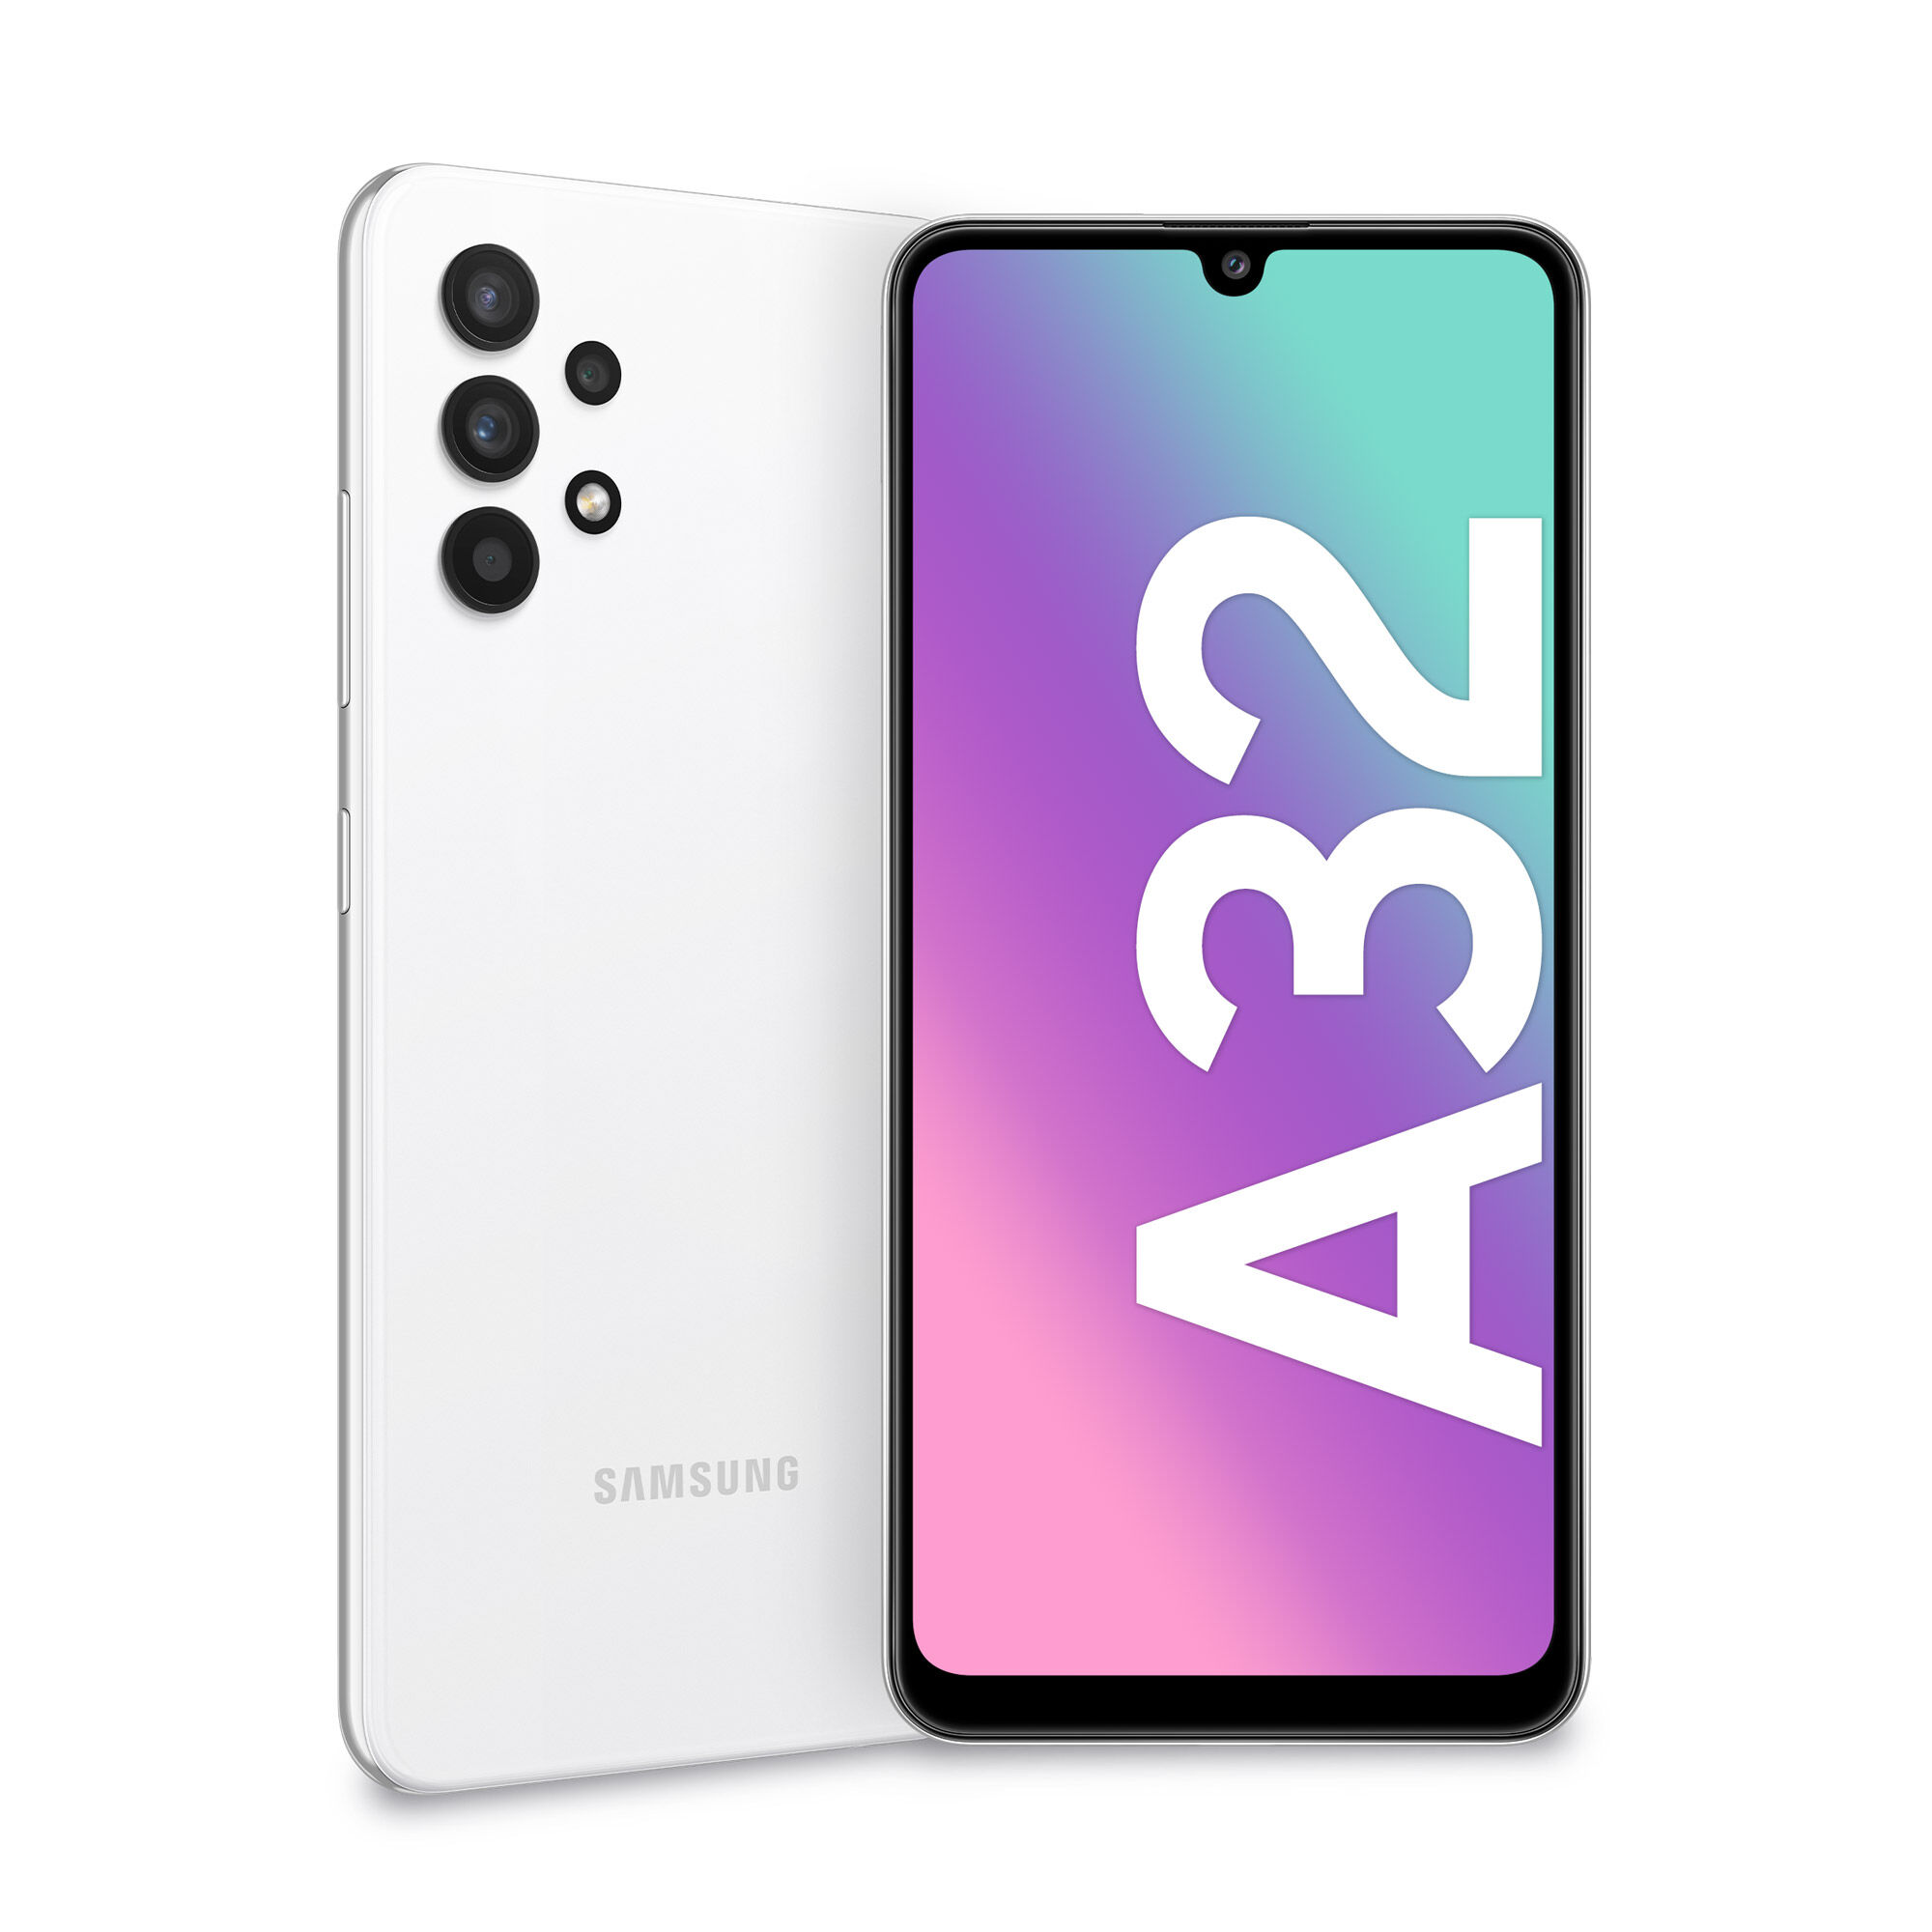 Samsung Galaxy A32 128GB Display 6.4” FHD+ Super AMOLED Awesome White